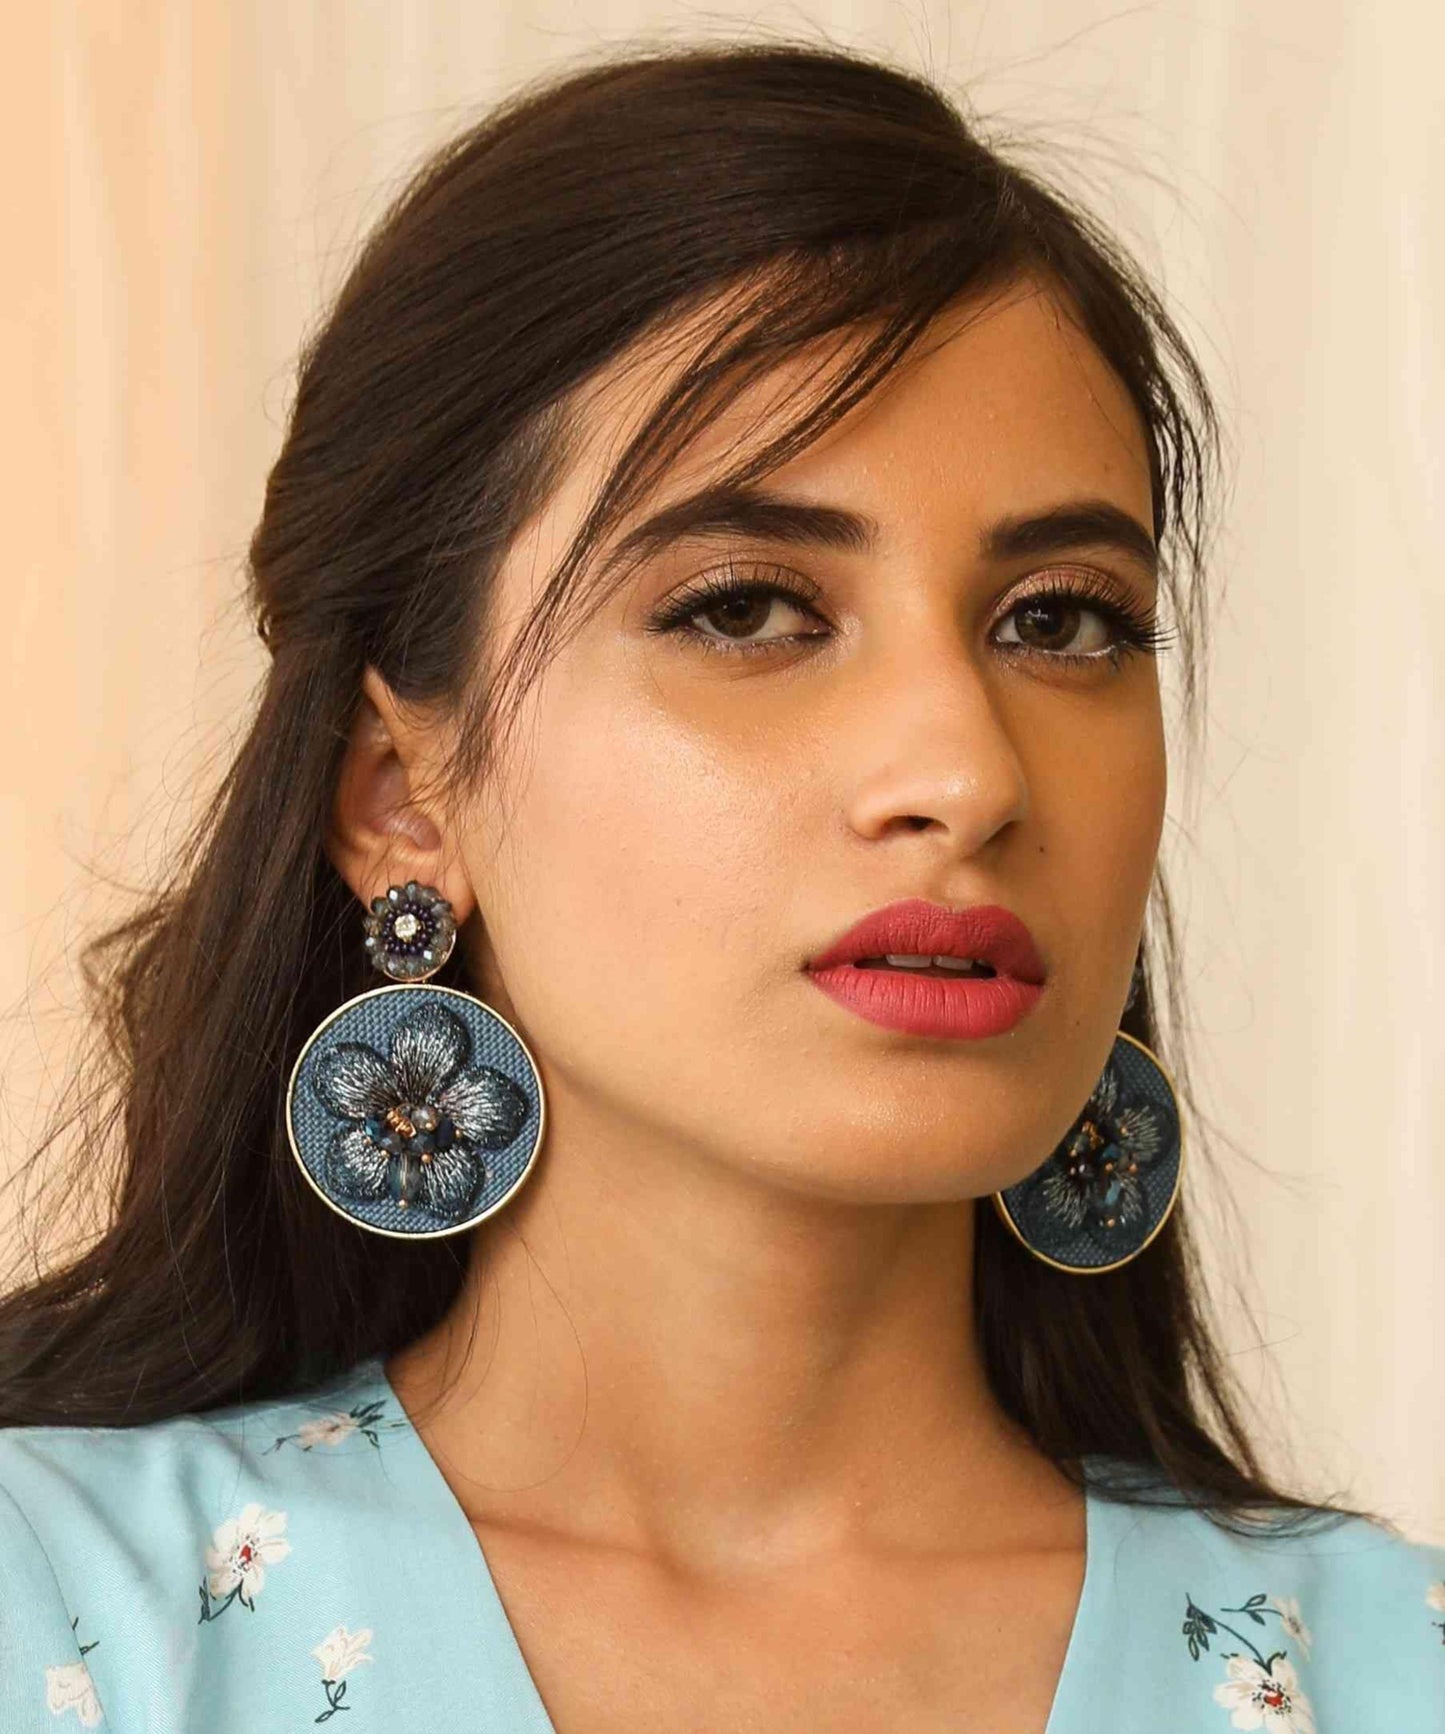 Indian Petals Fabric Flower on Round Disc Design Artificial Fashion Dangler Earrings for Girls Women, Black